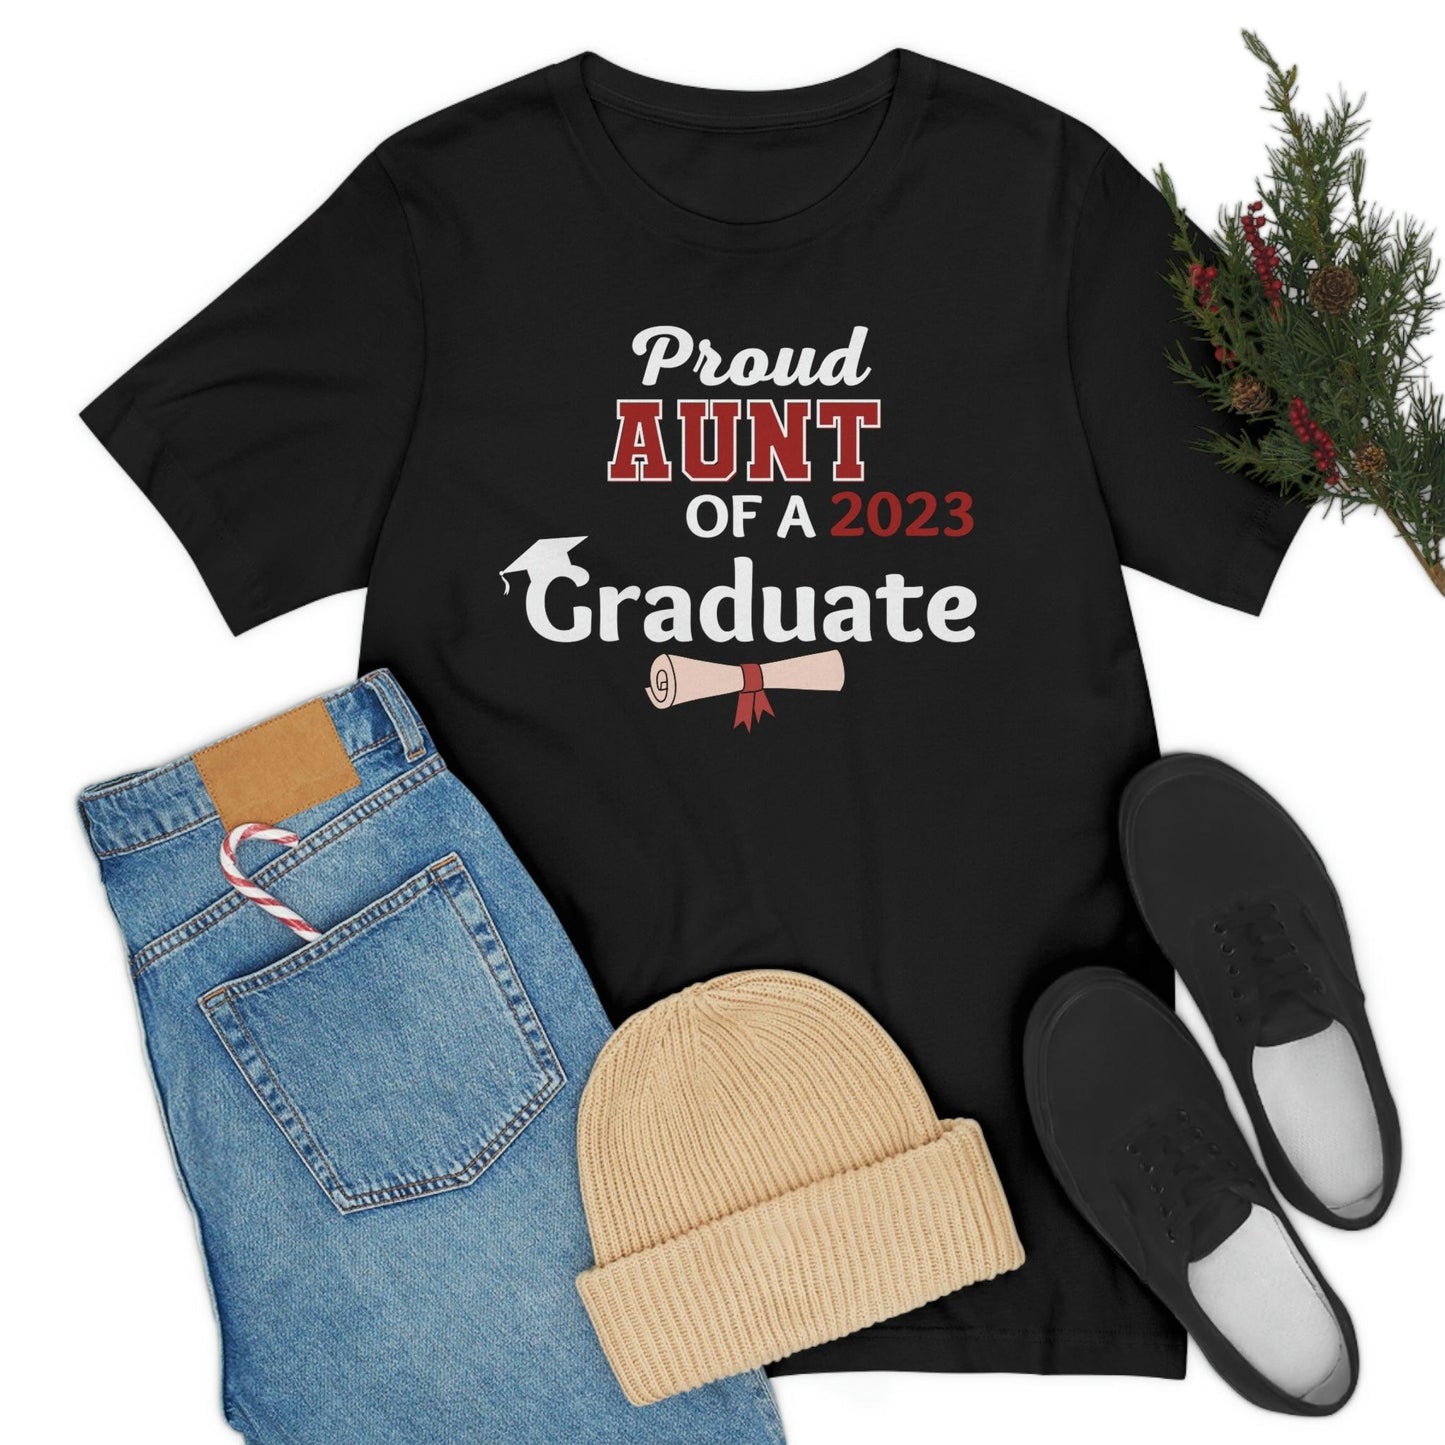 Proud Aunt of a Graduate shirt - Graduation shirt - Graduation gift